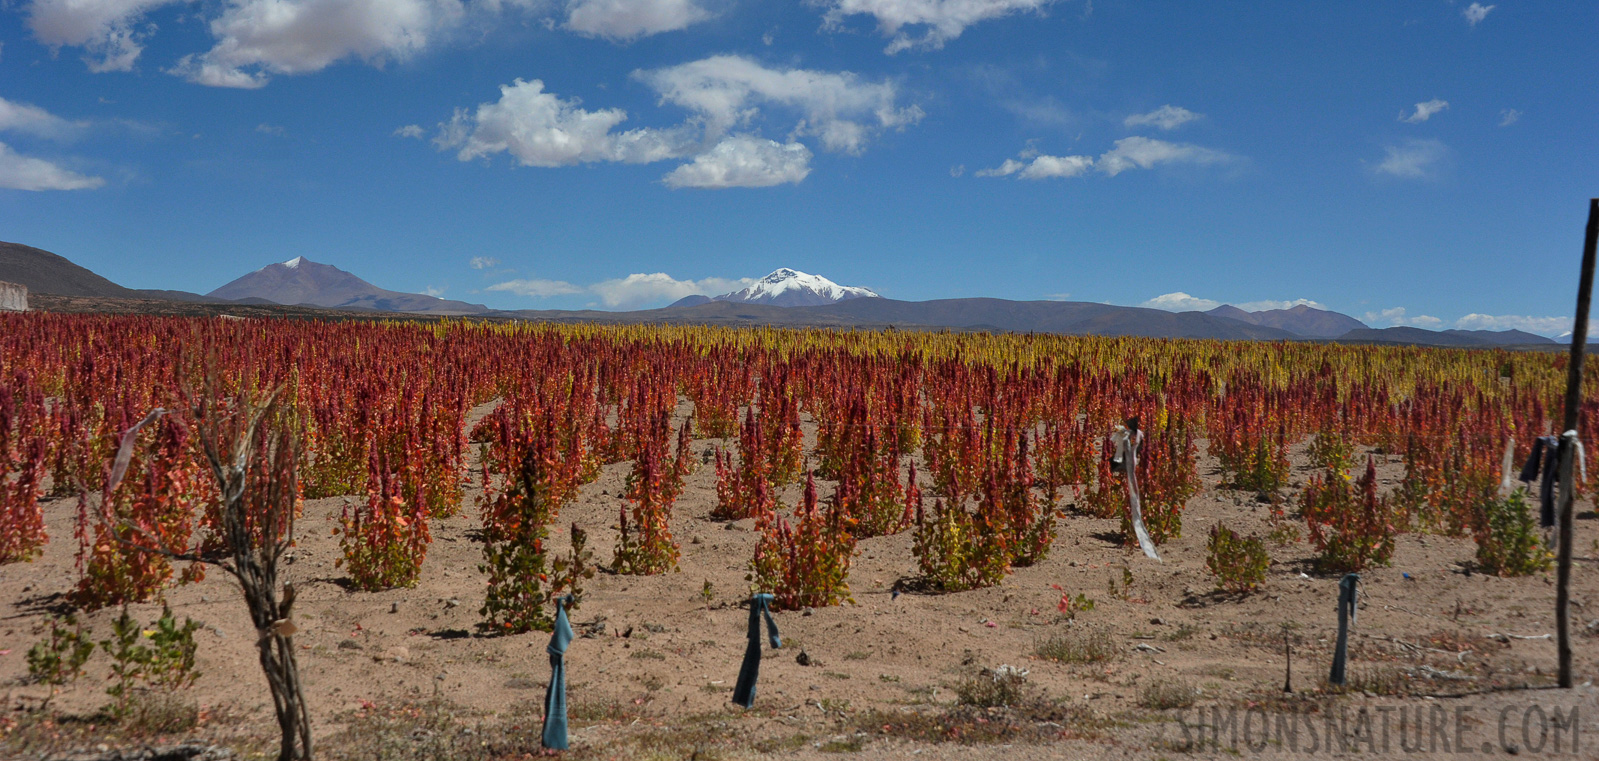 Quinoa fields [45 mm, 1/6400 sec at f / 8.0, ISO 1600]